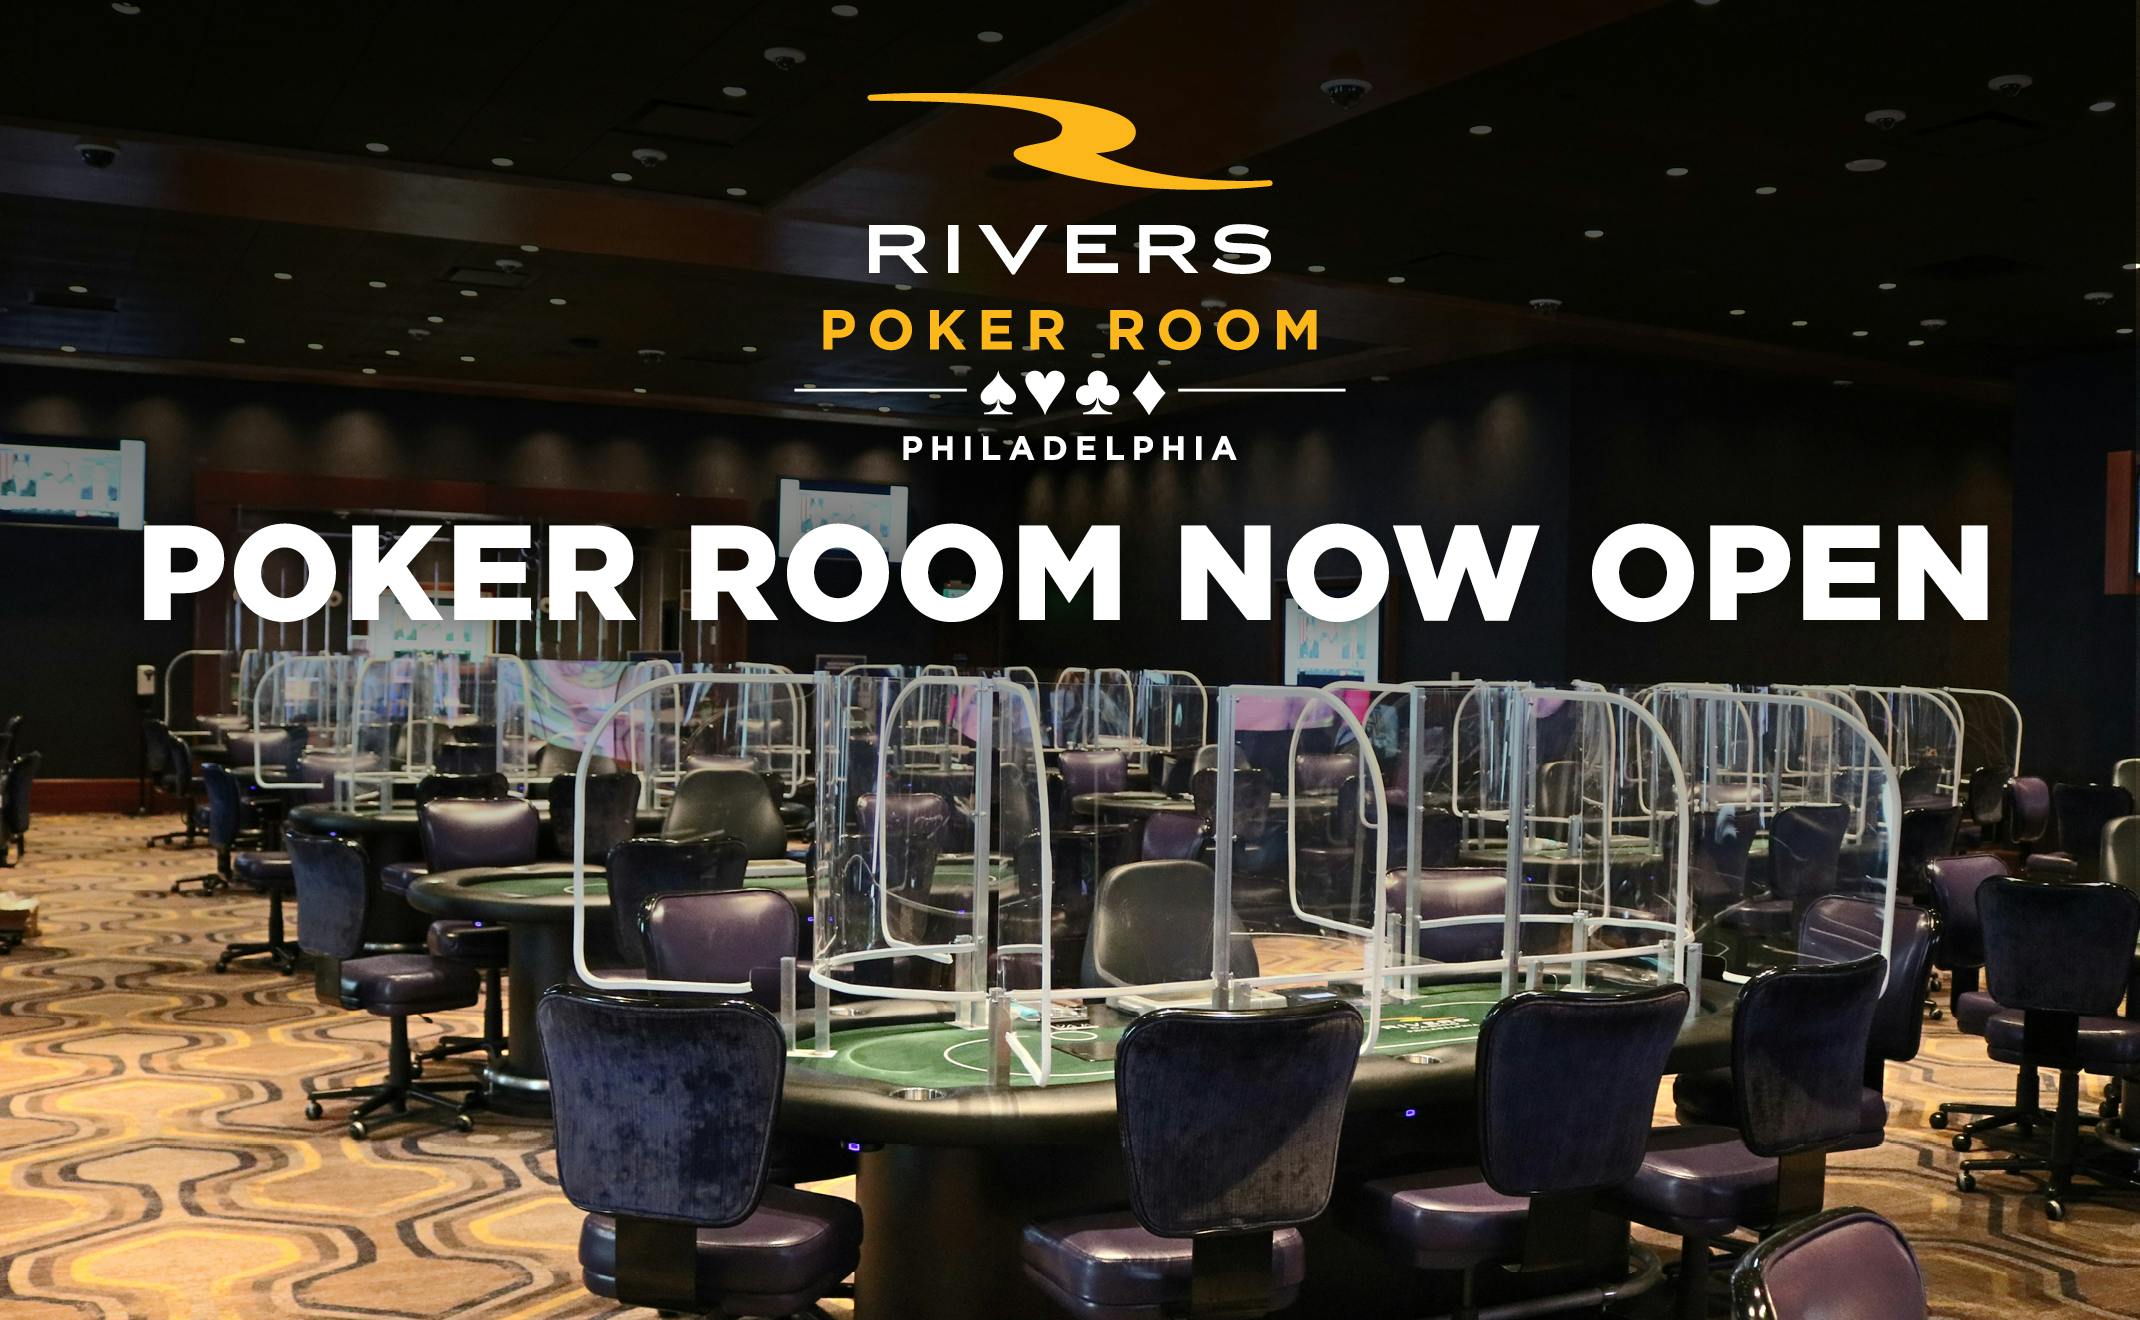 Riverwind Poker Room Hours